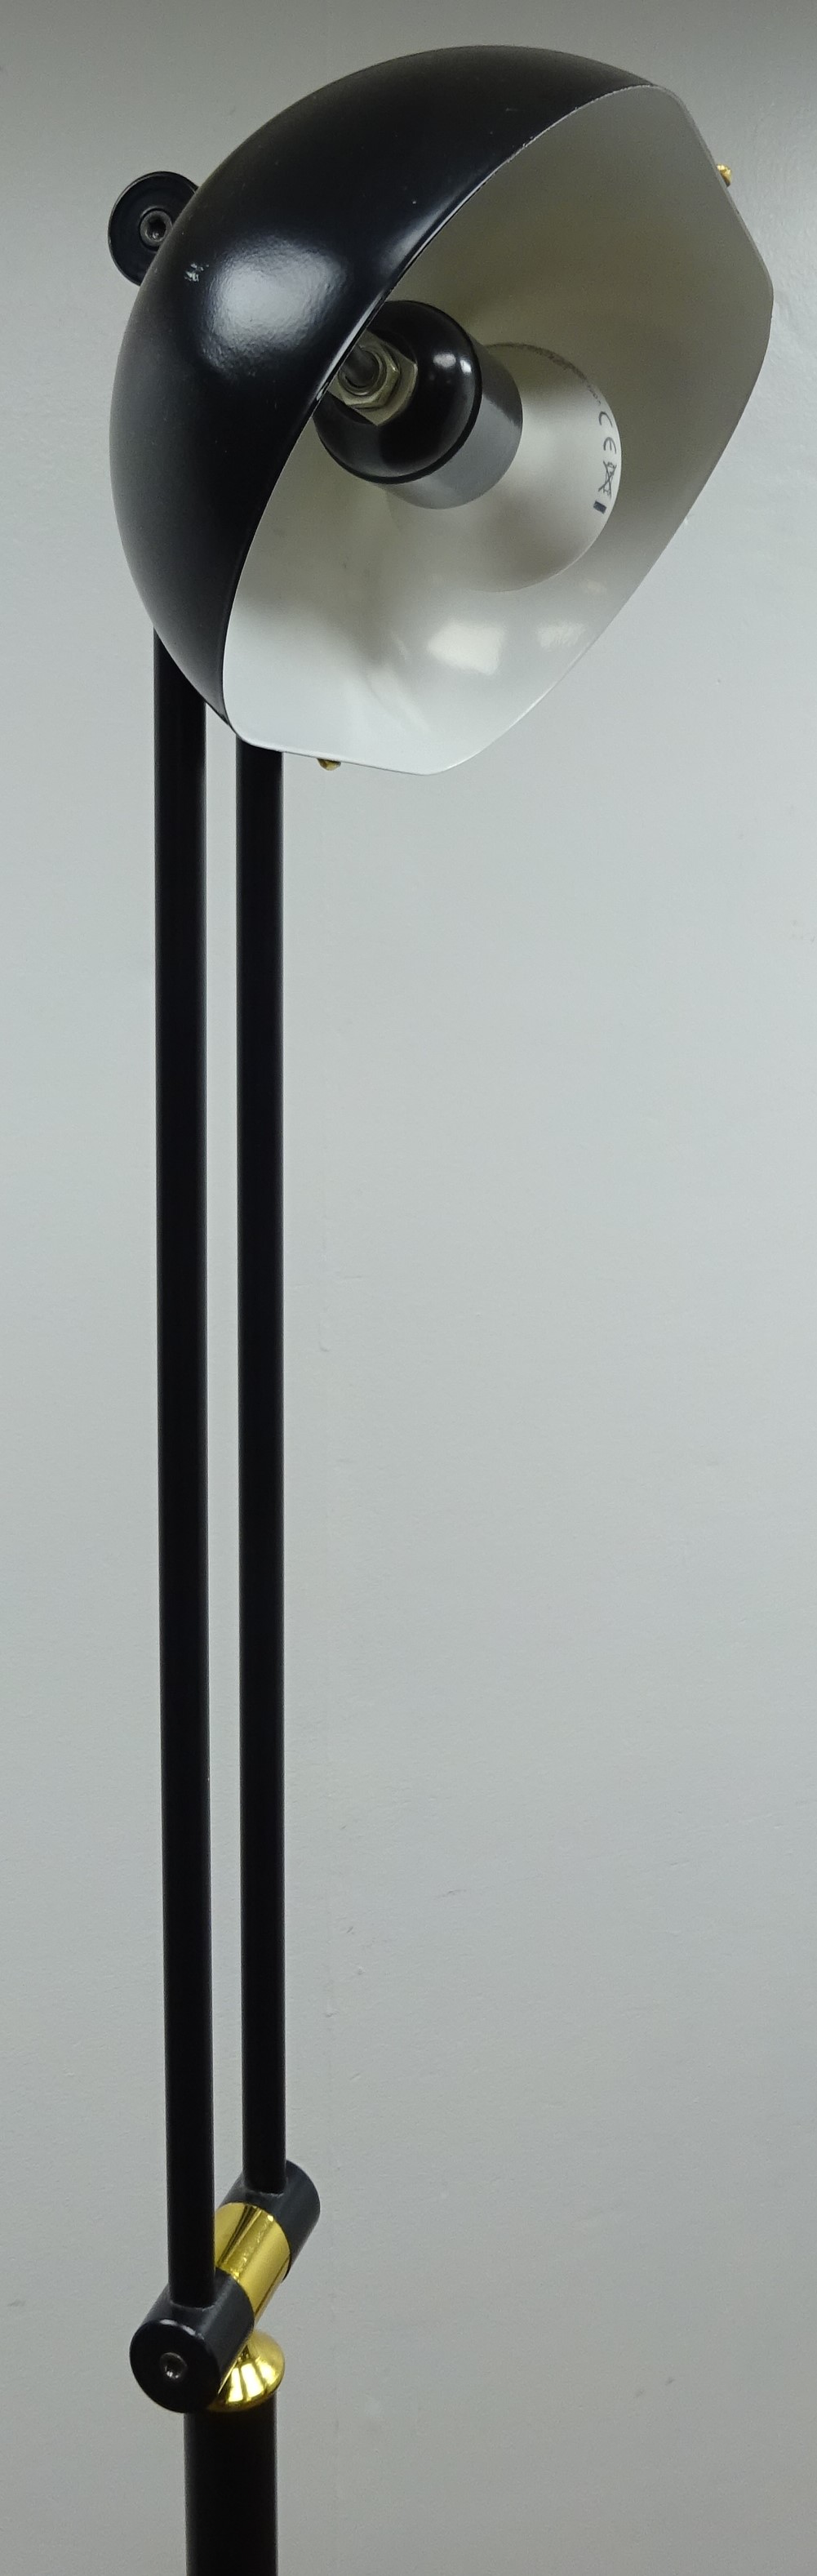 Adjustable black and gold finish standard lamp, - Image 2 of 2